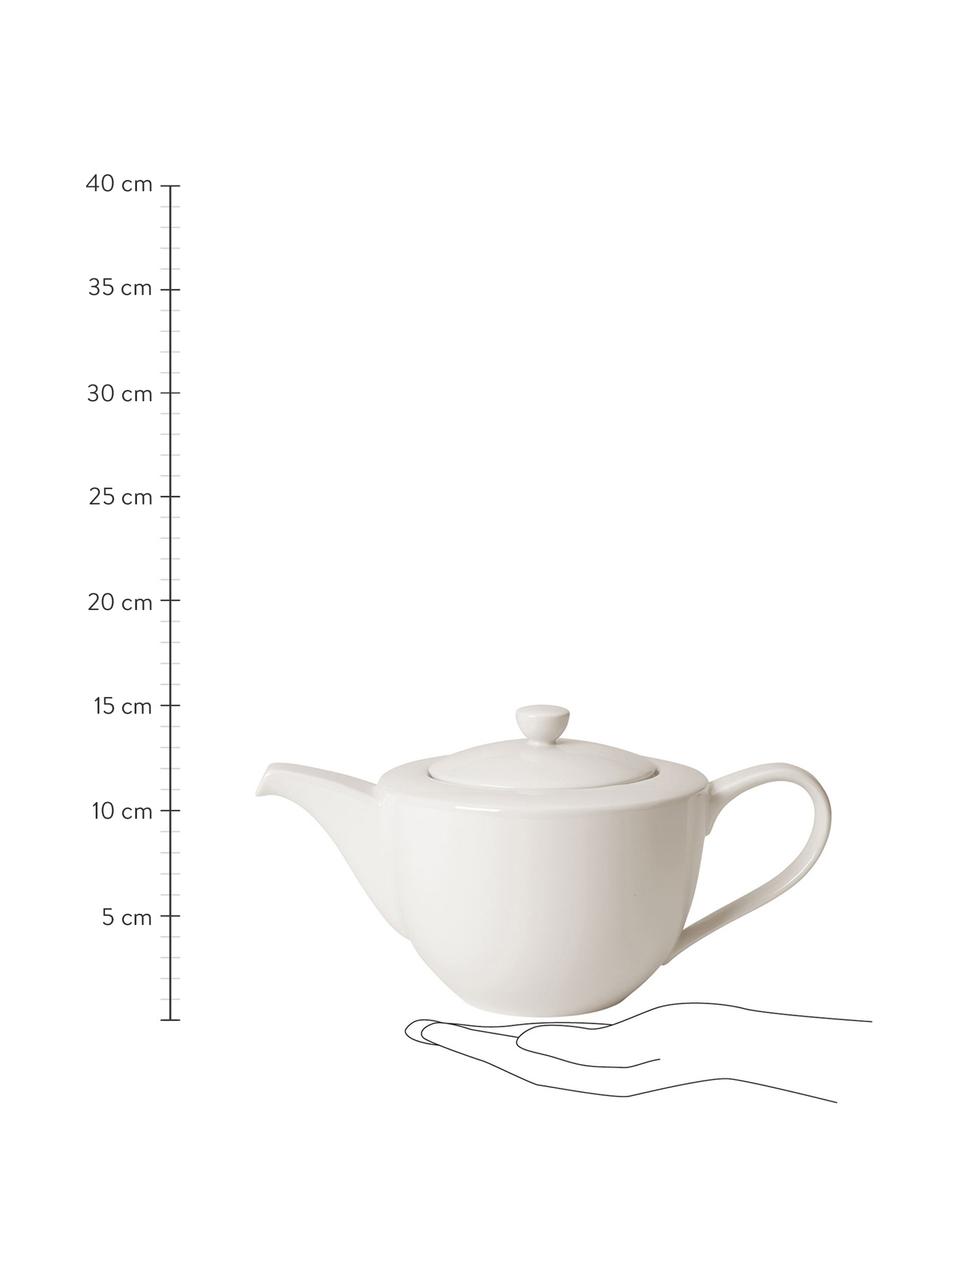 Teekanne For Me aus Porzellan, 1.3 L, Porzellan, Weiß, 1.3 L